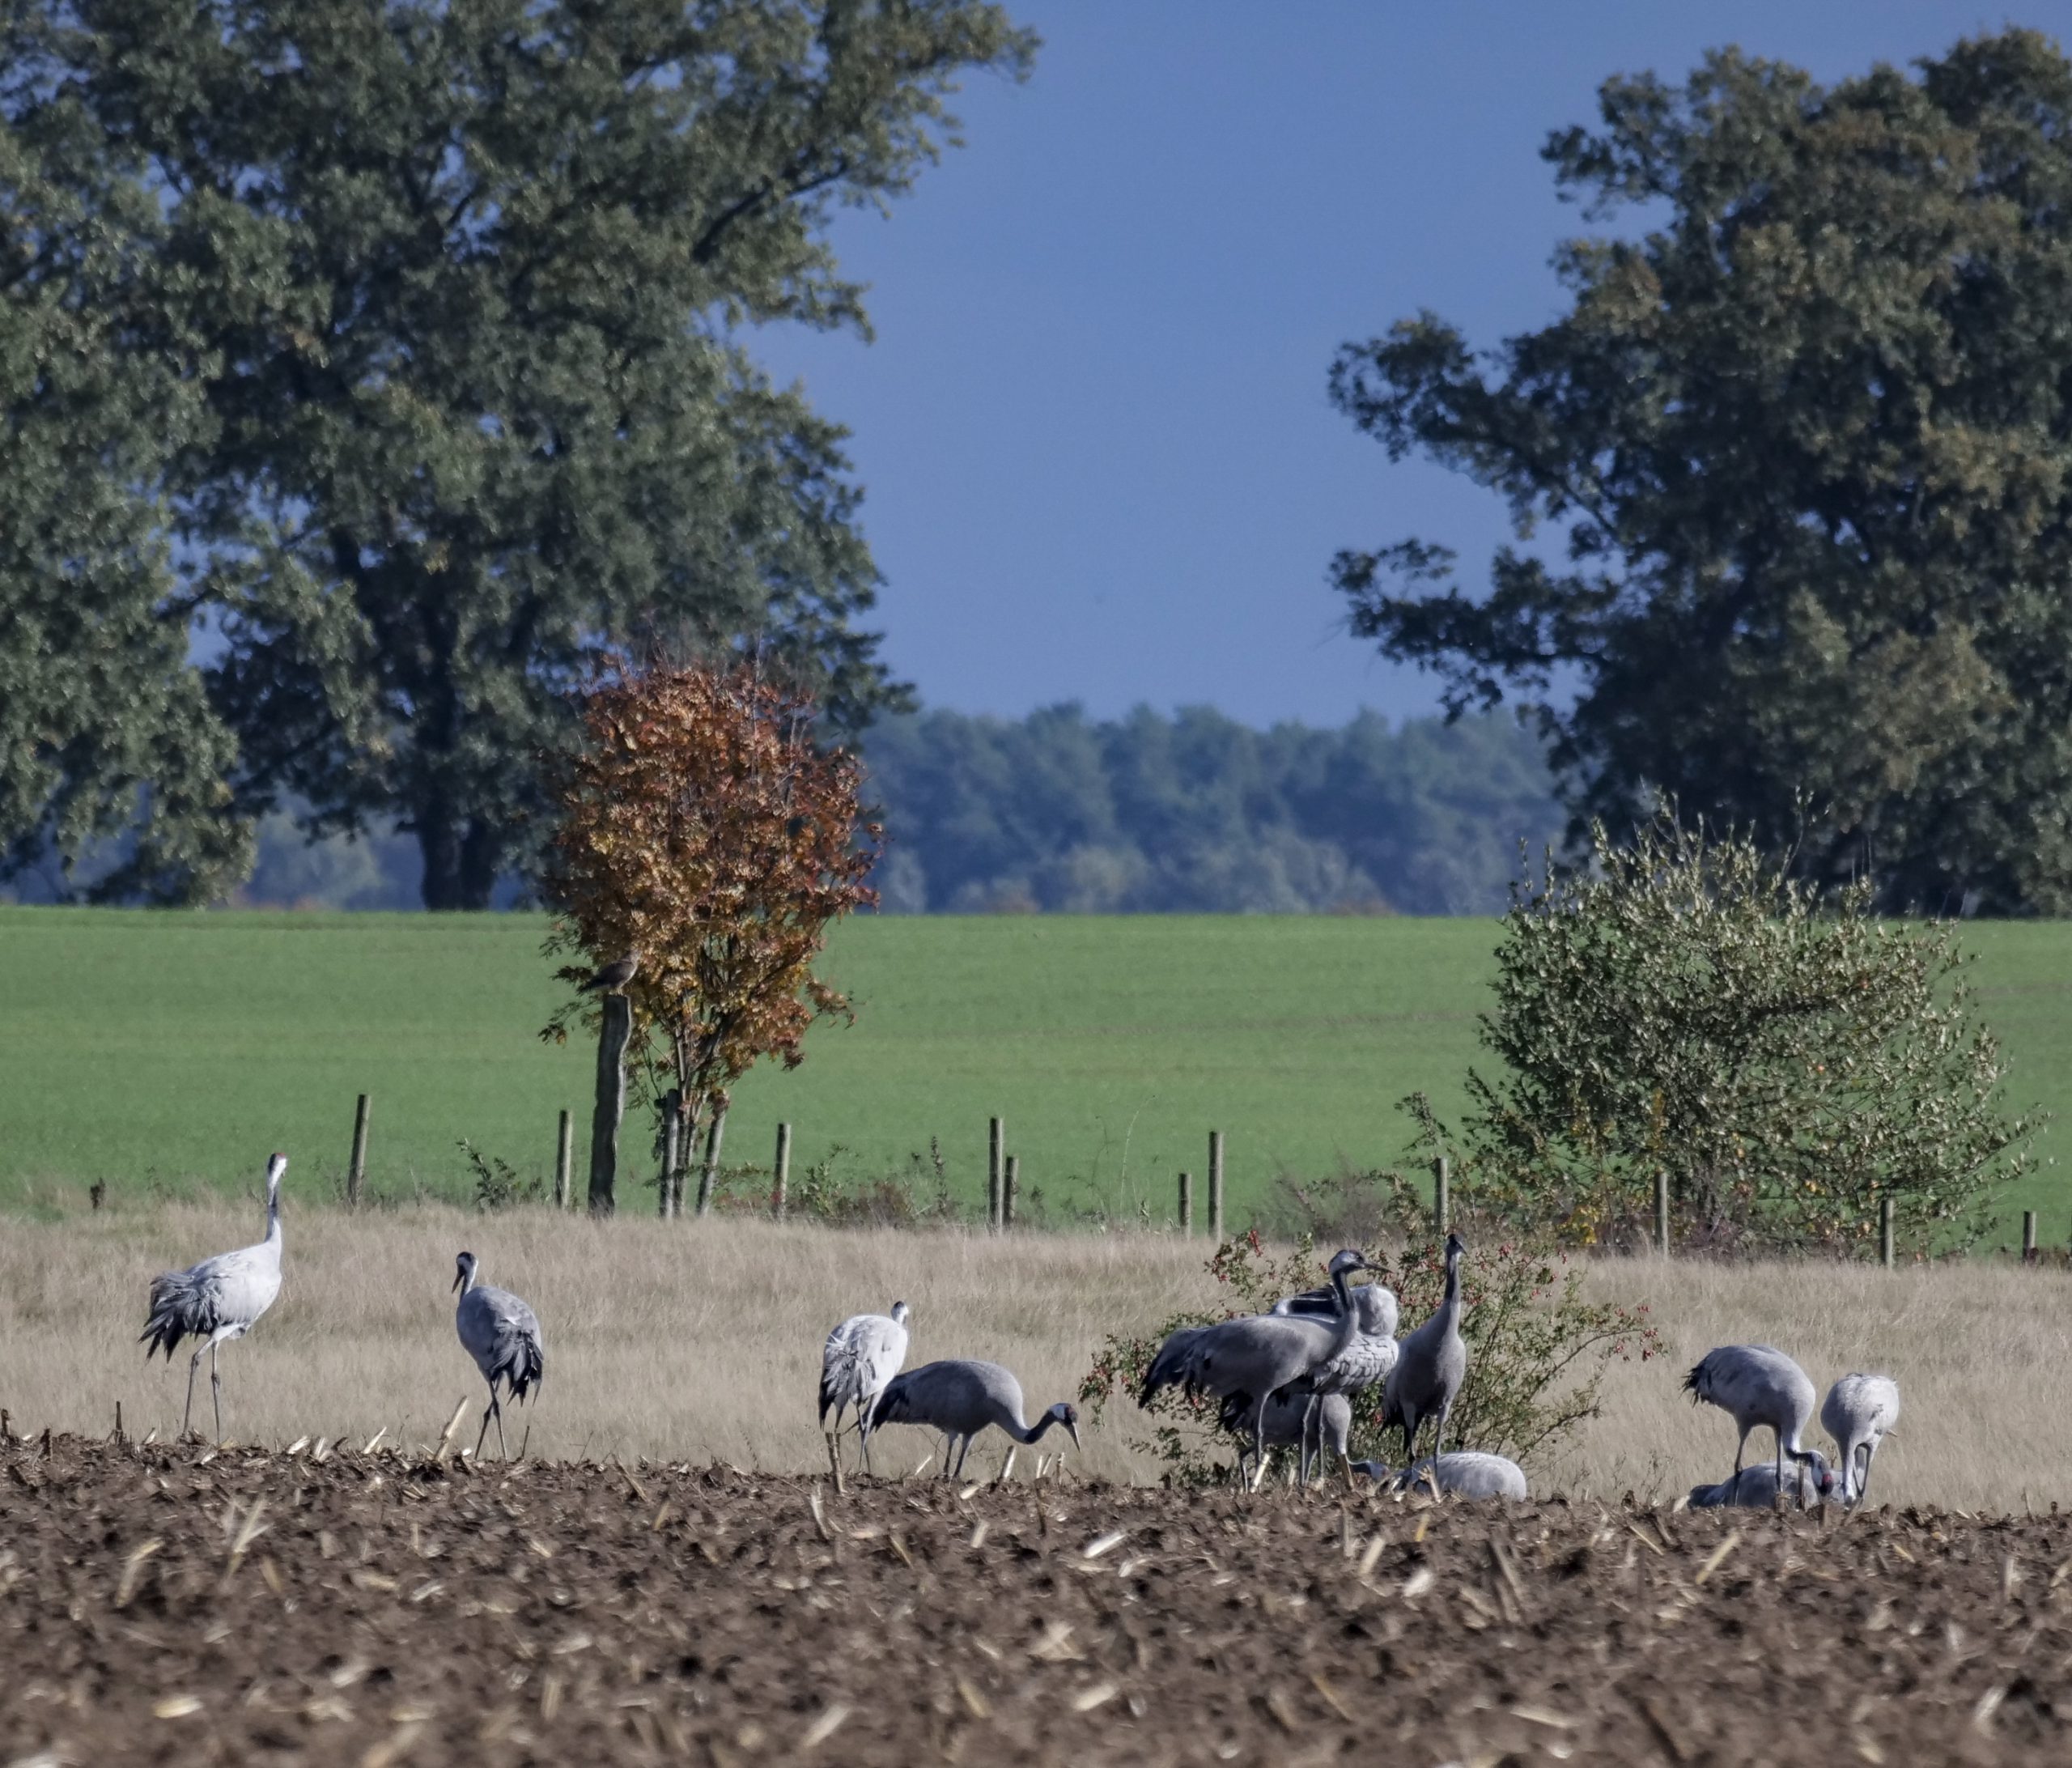 Cranes on the Field III